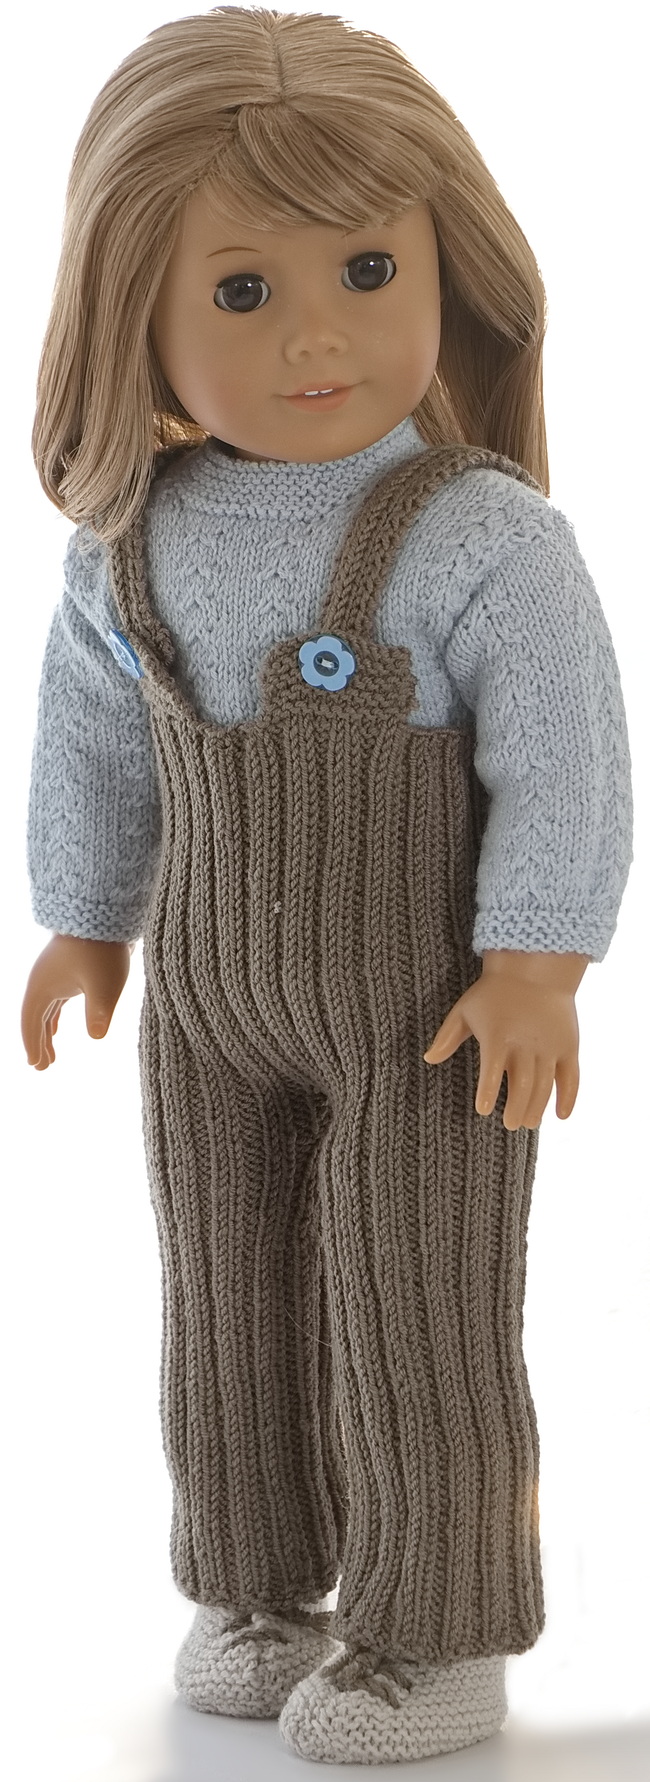 0237d-03-doll-knitting-clothes-patterns.jpg